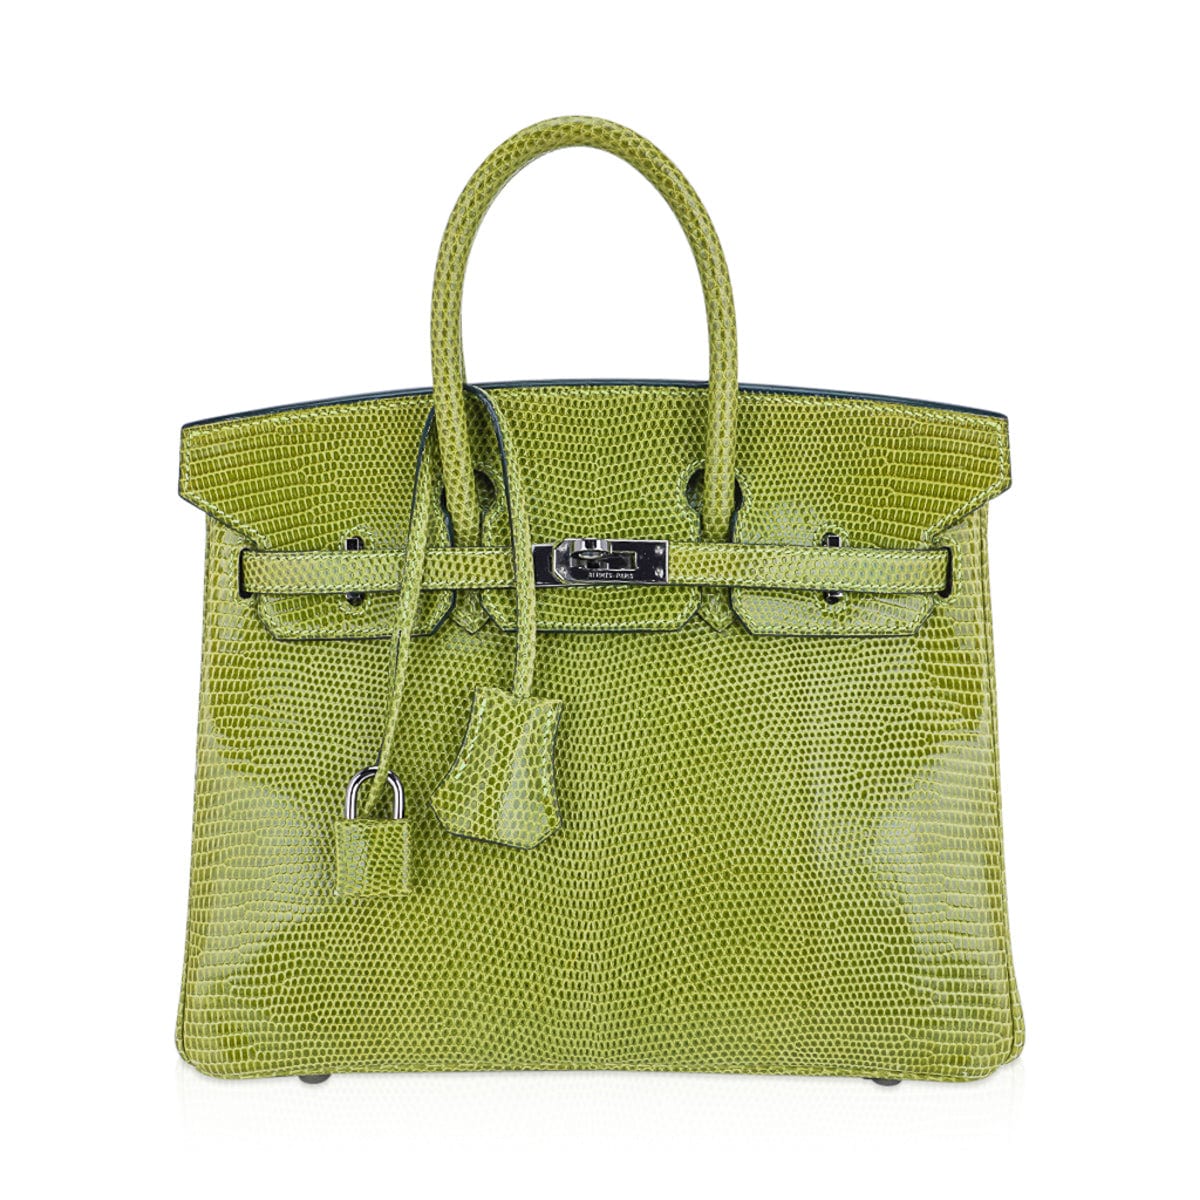 Hermes Limited Edition Birkin 25 Bag in Vert Anis Lizard with Palladium Hardware